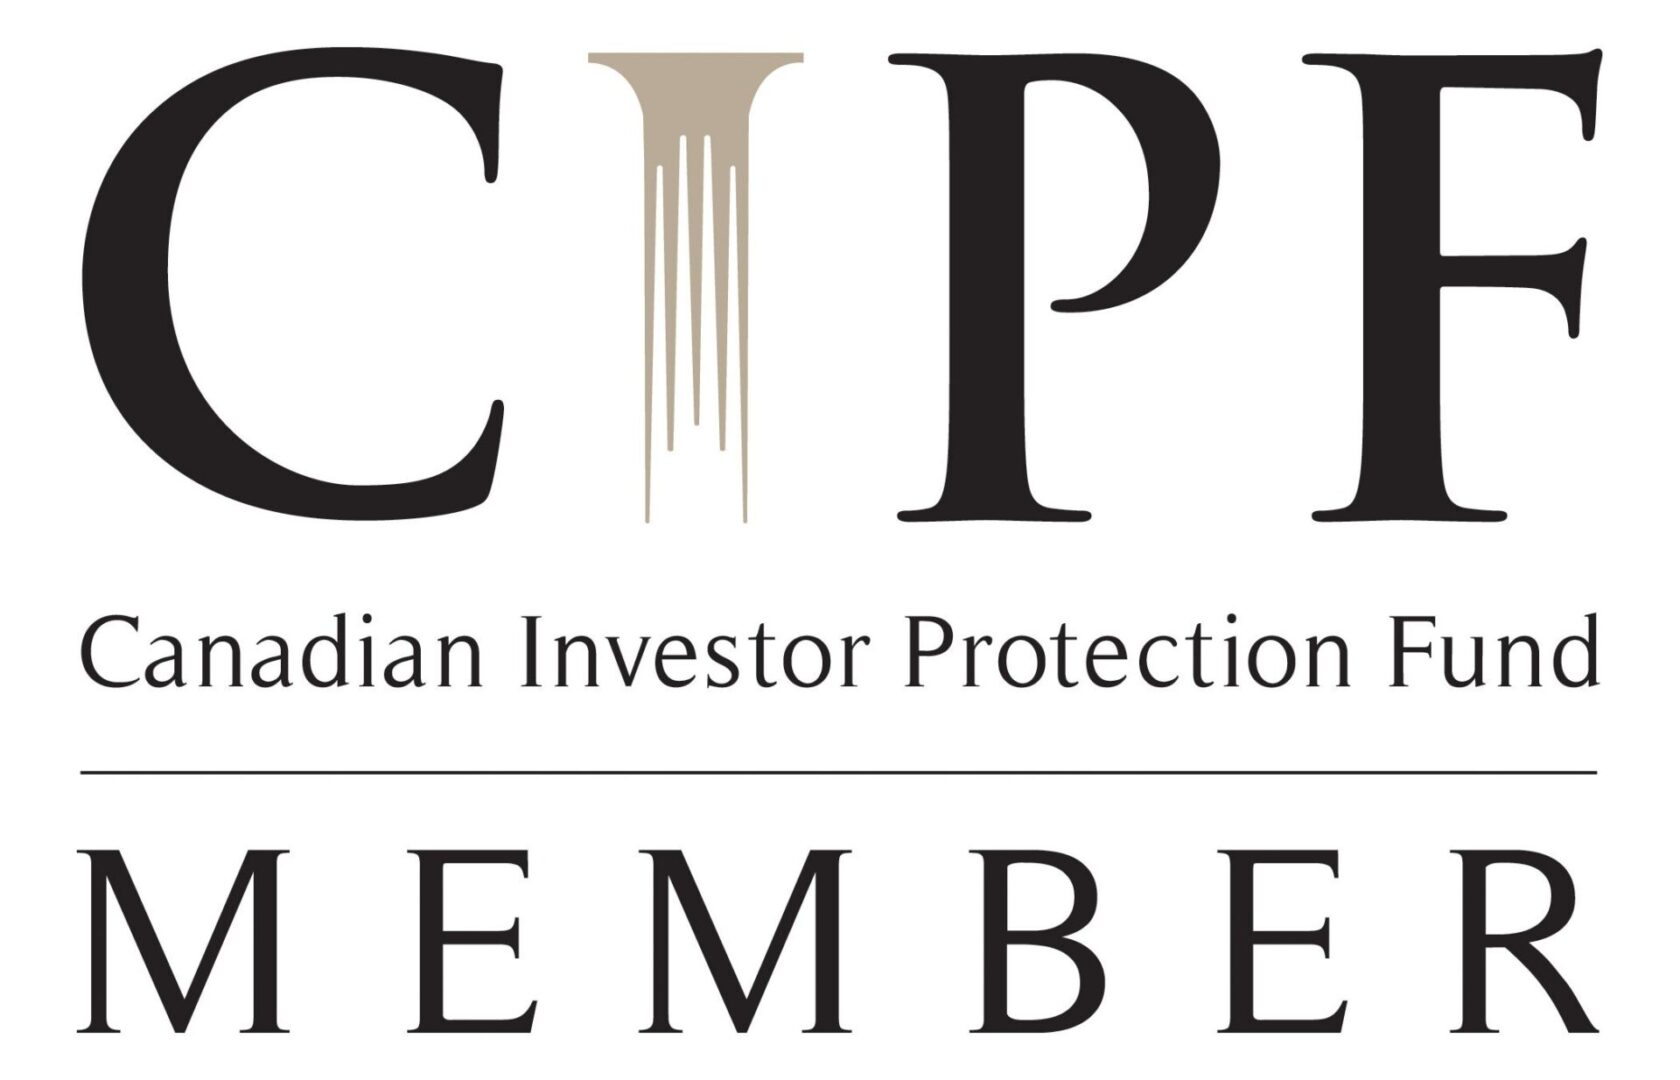 Canadian investor protection association member